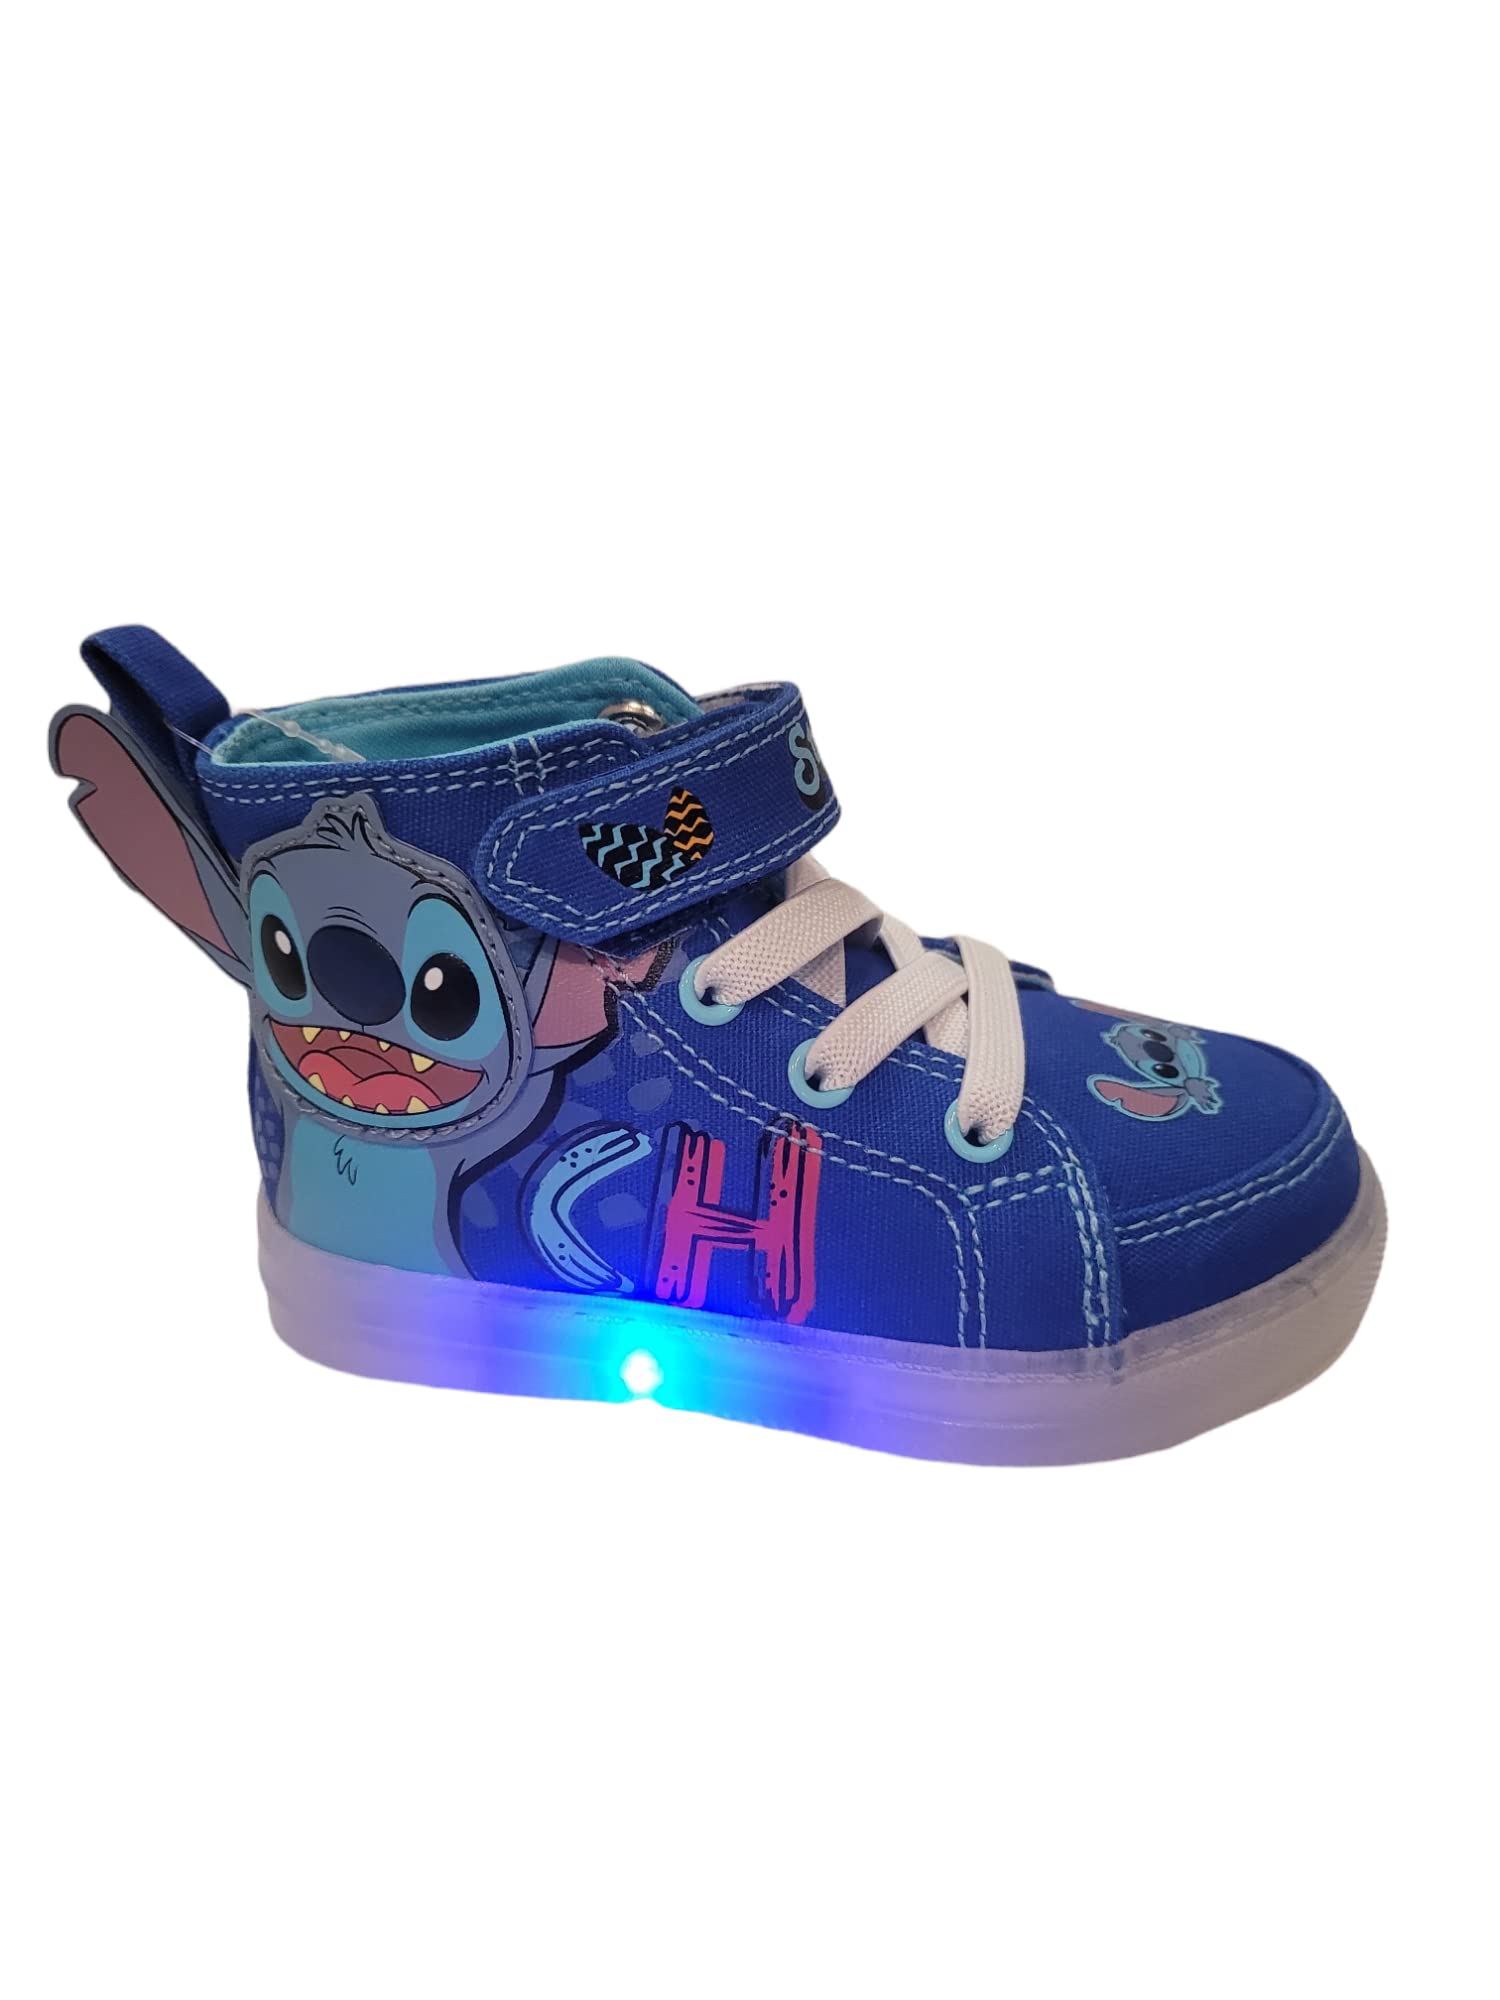 Disney Stitch Unisex Kids Light Up Sole Blue Hi Top Sneaker Size: 8